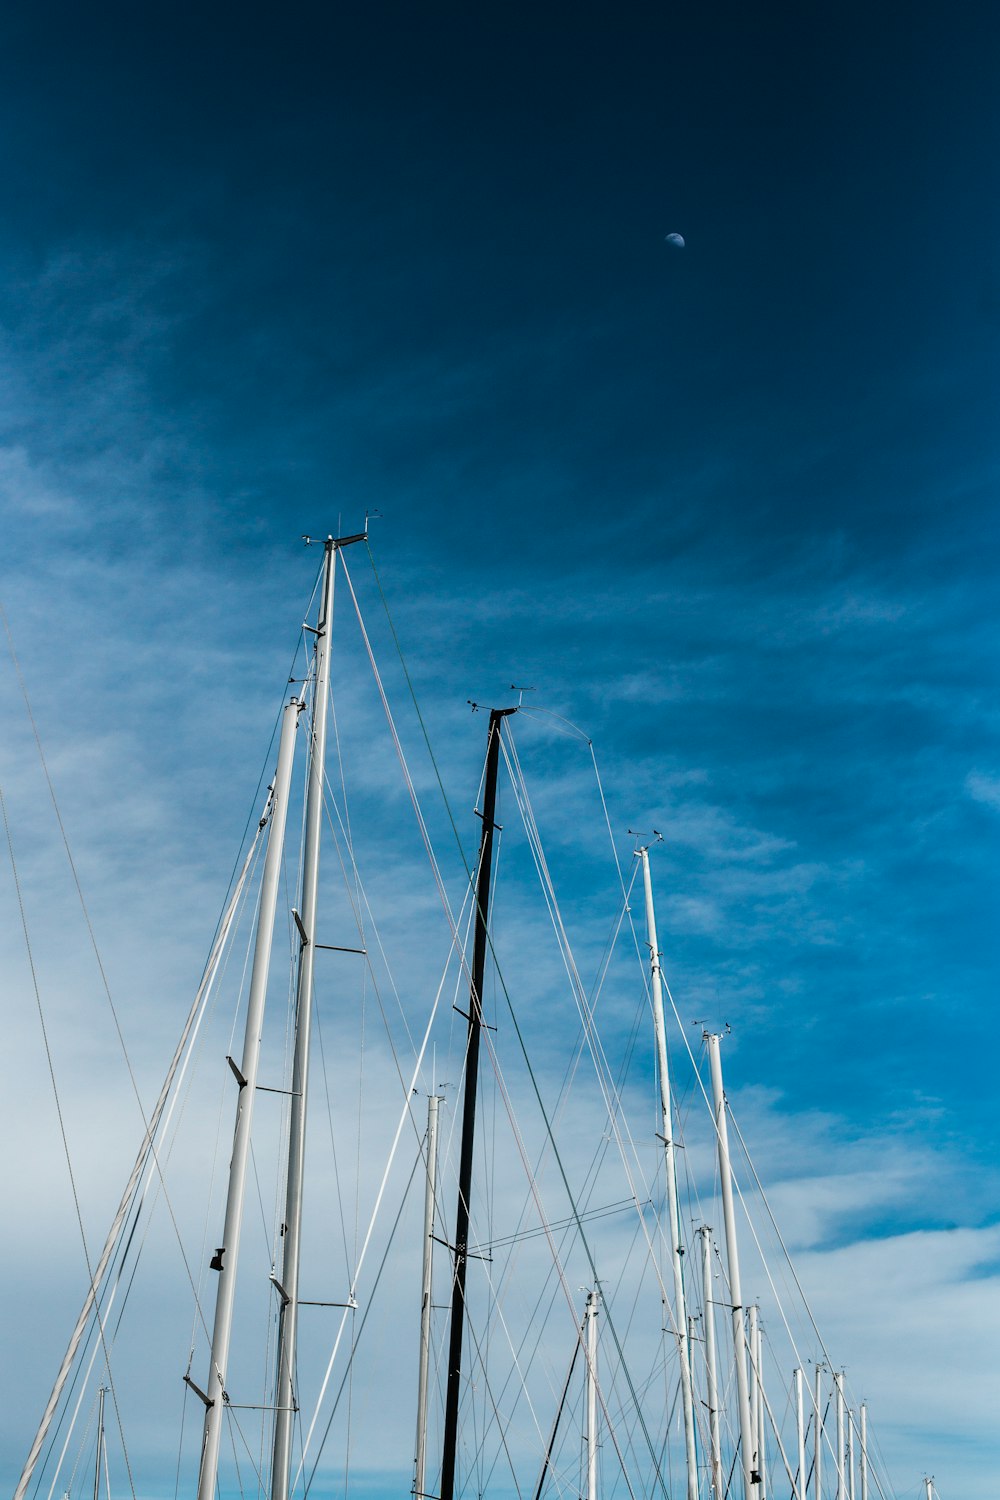 veleiro branco no mar sob o céu azul durante o dia